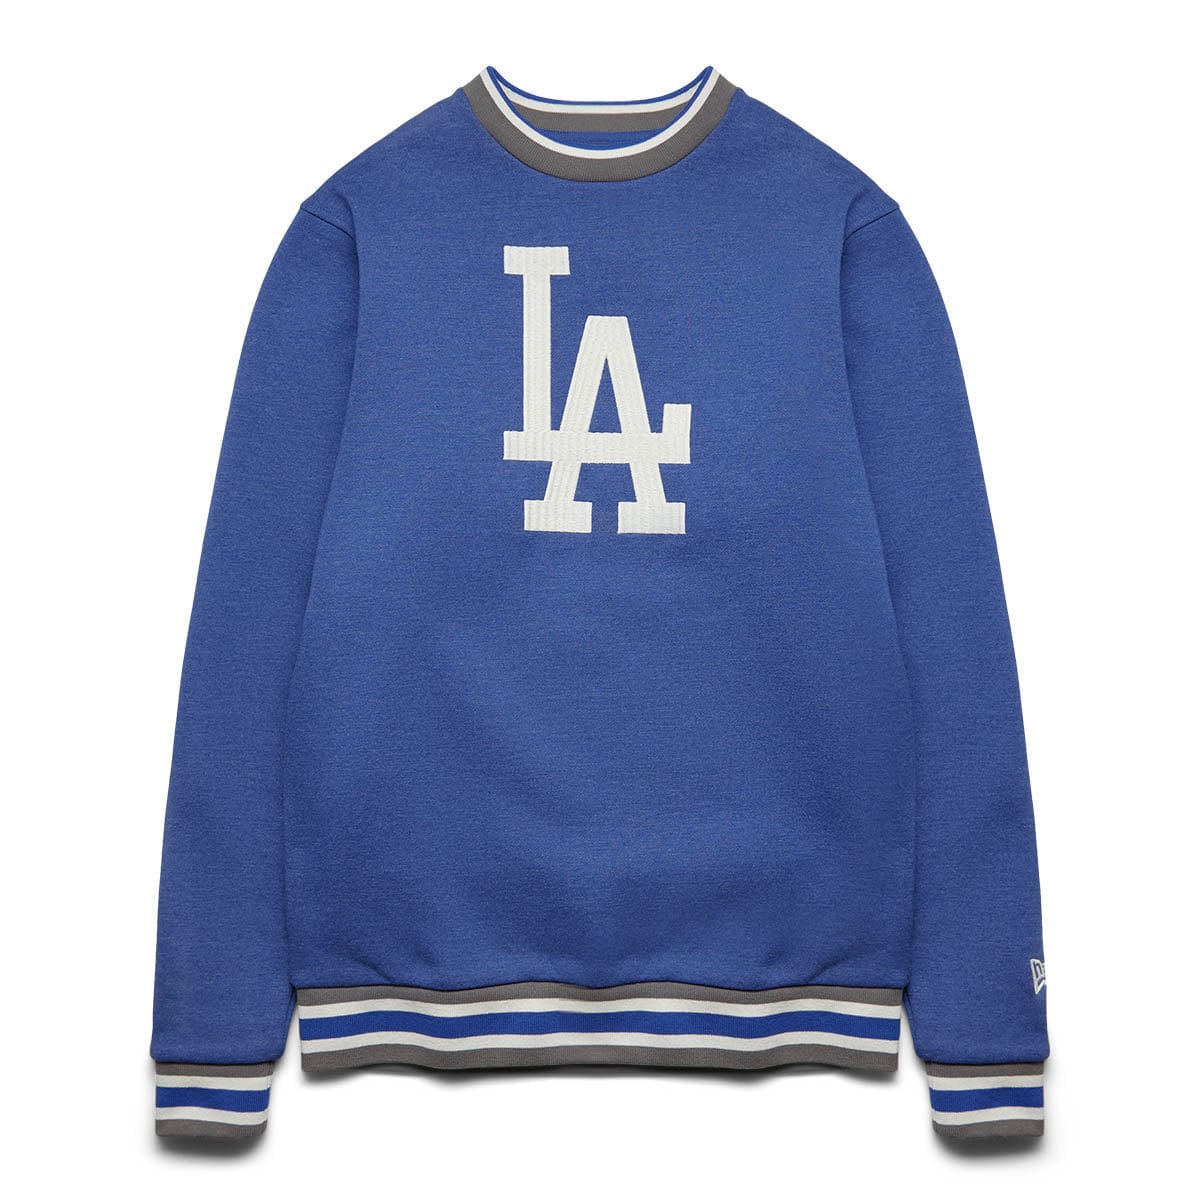 Blue Nike MLB LA Dodgers Logo T-Shirt